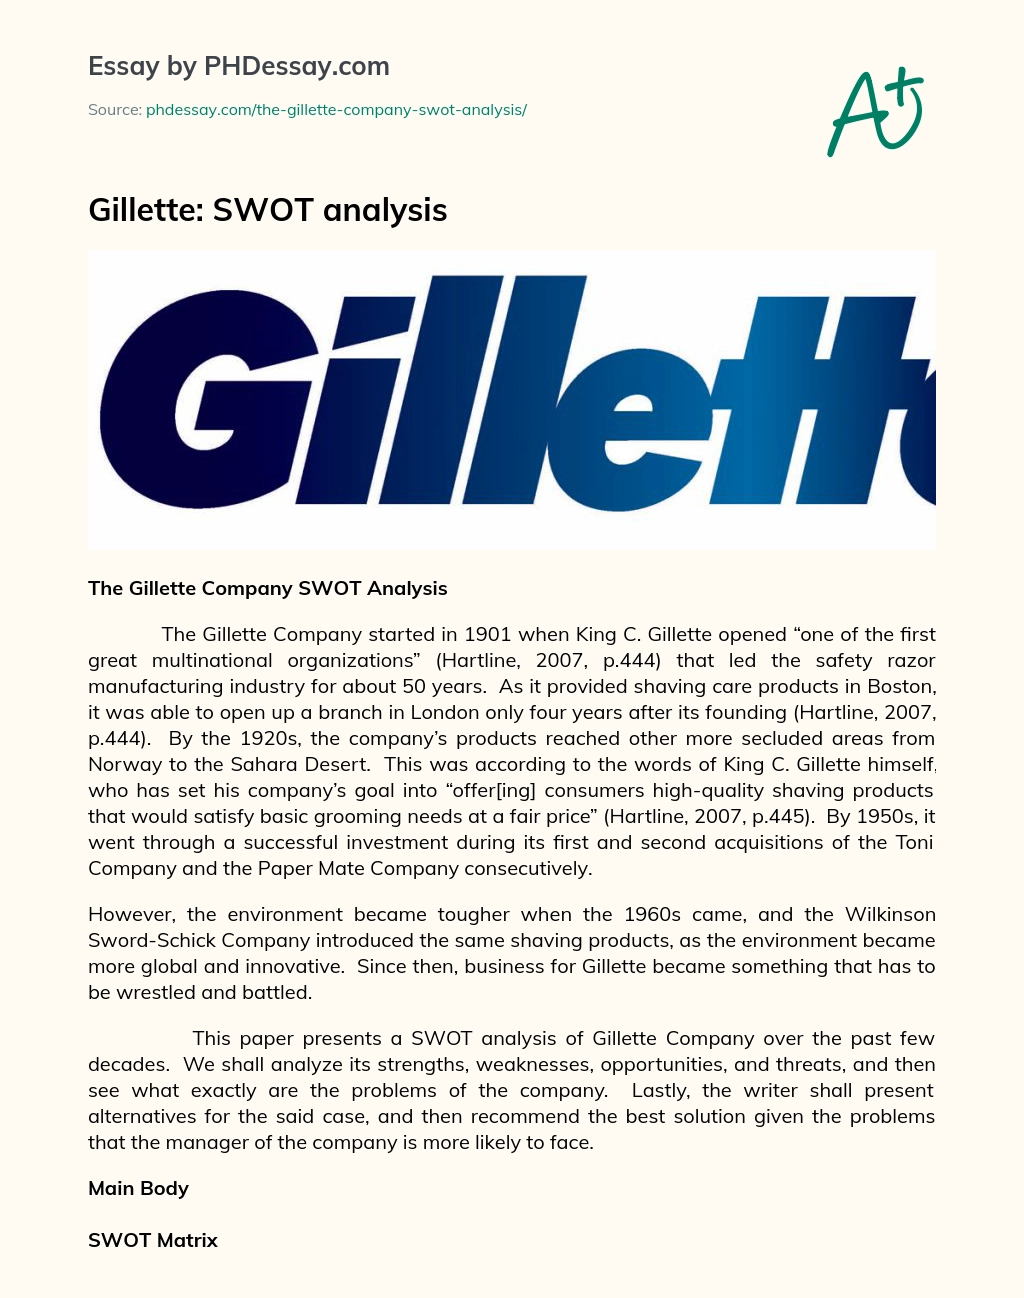 Gillette: SWOT Analysis essay